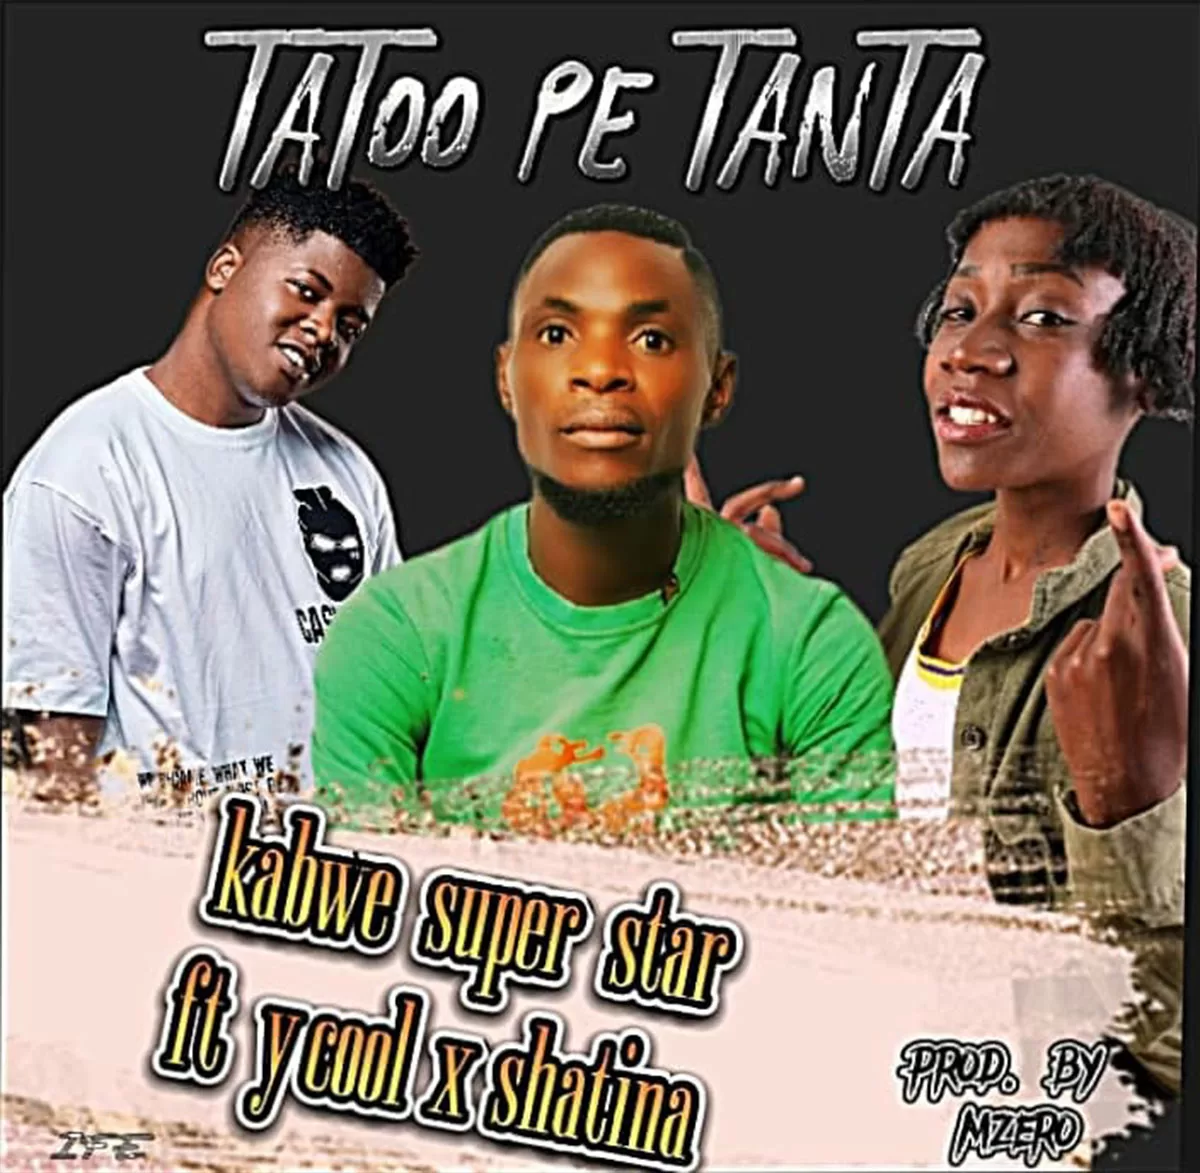 Kabwe Supestar ft. Y Cool & Shatina - Tattoo Petanta